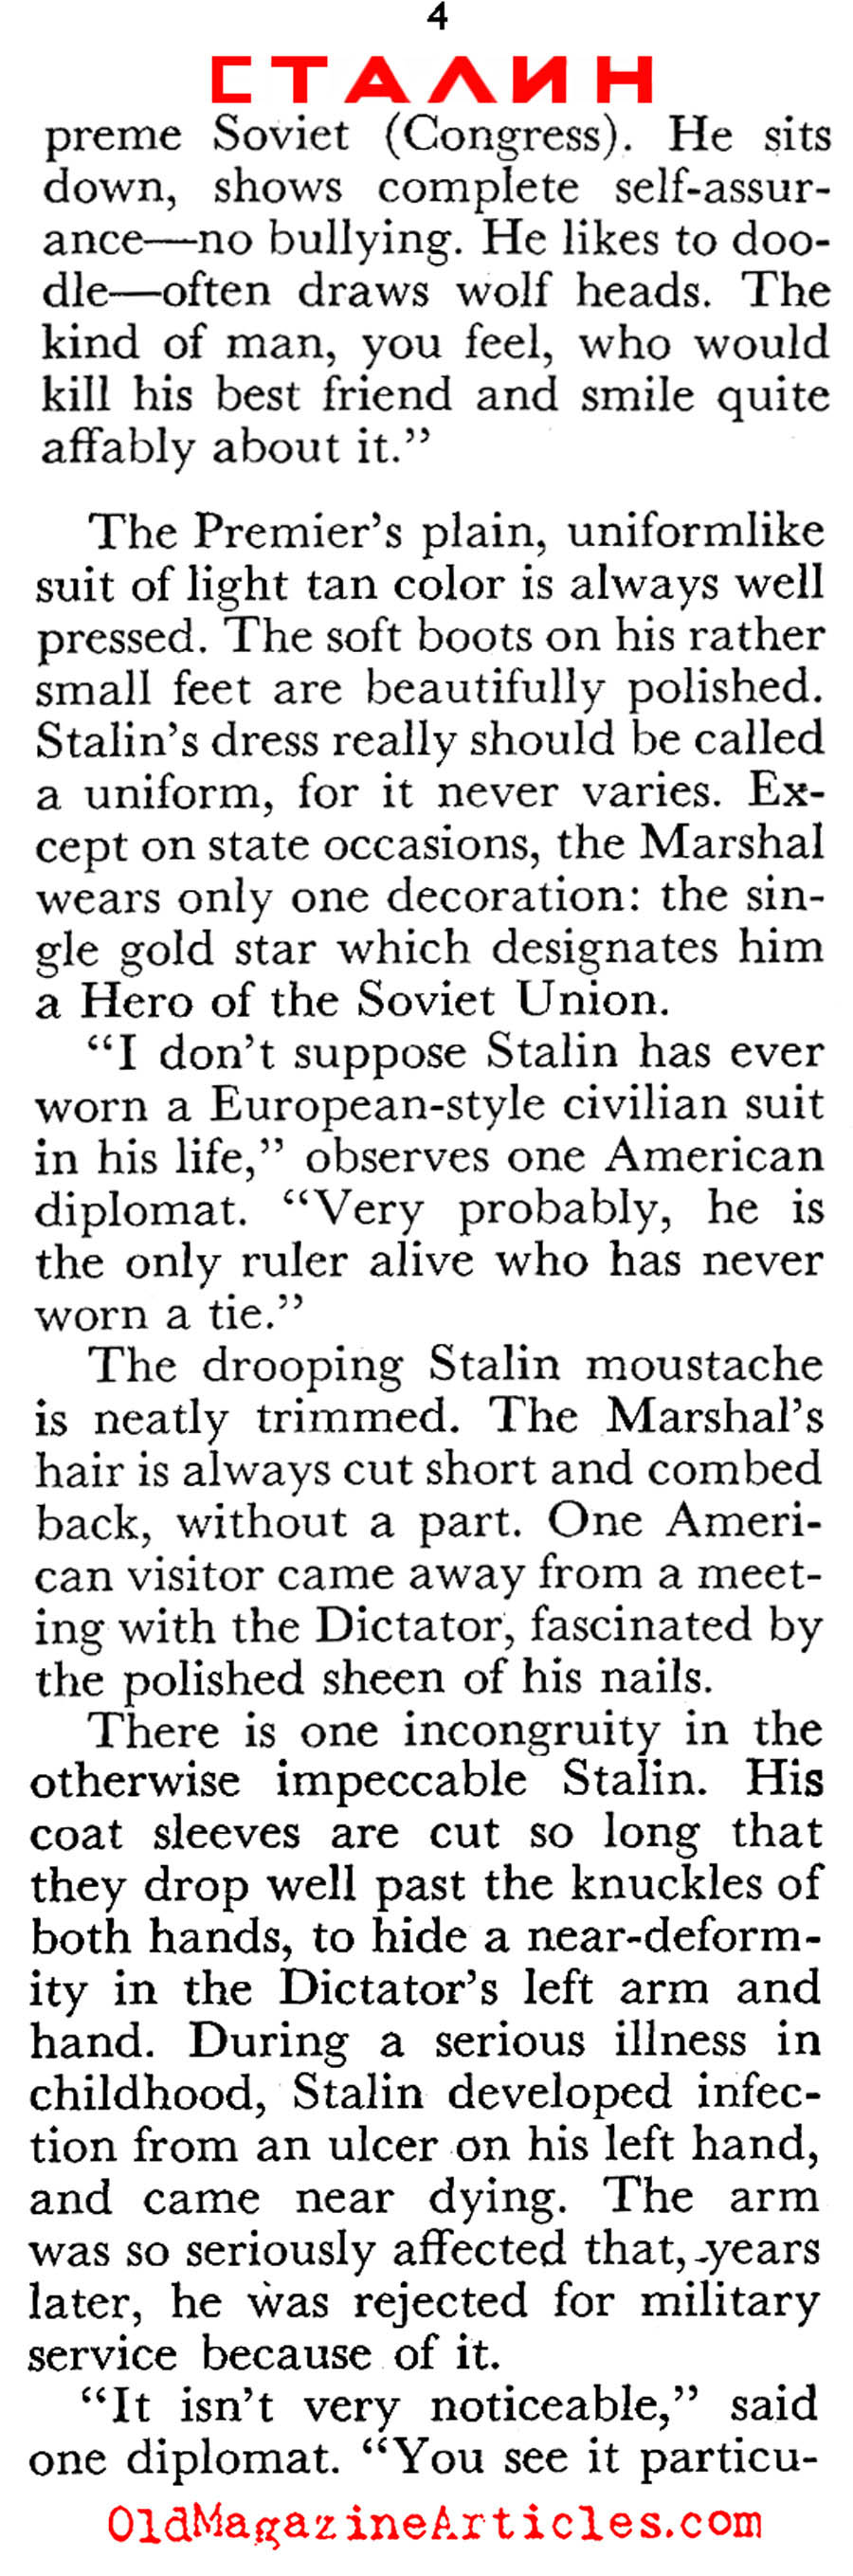 Stalin at 72 (Coronet Magazine, 1952)